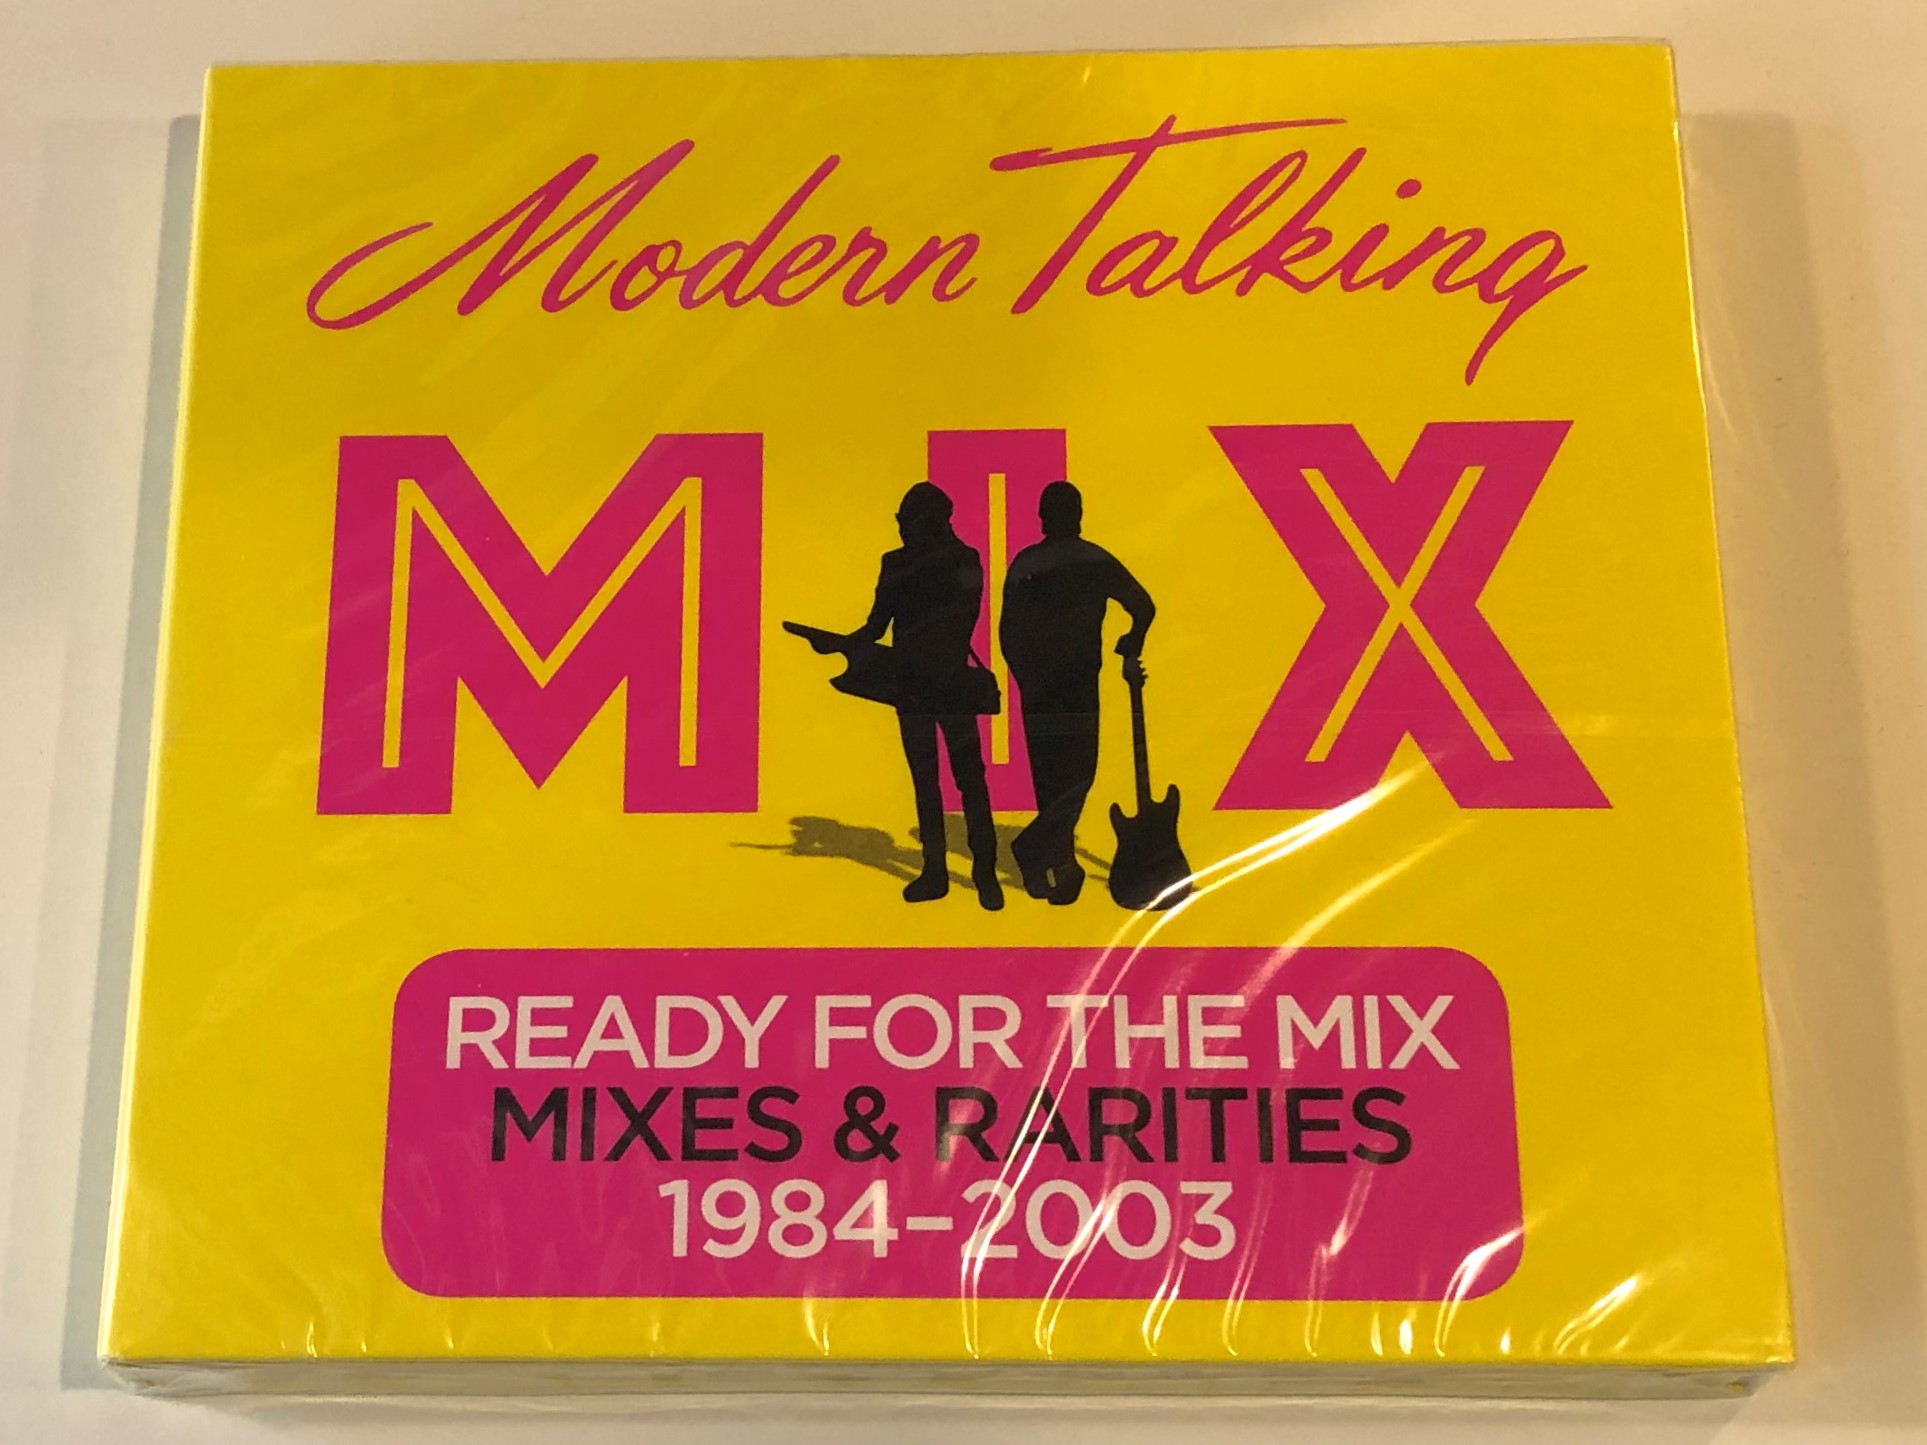 modern-talking-mix-ready-for-the-mix-mixes-rarities-1984-2003-sony-music-2x-audio-cd-2017-88985379702-1-.jpg